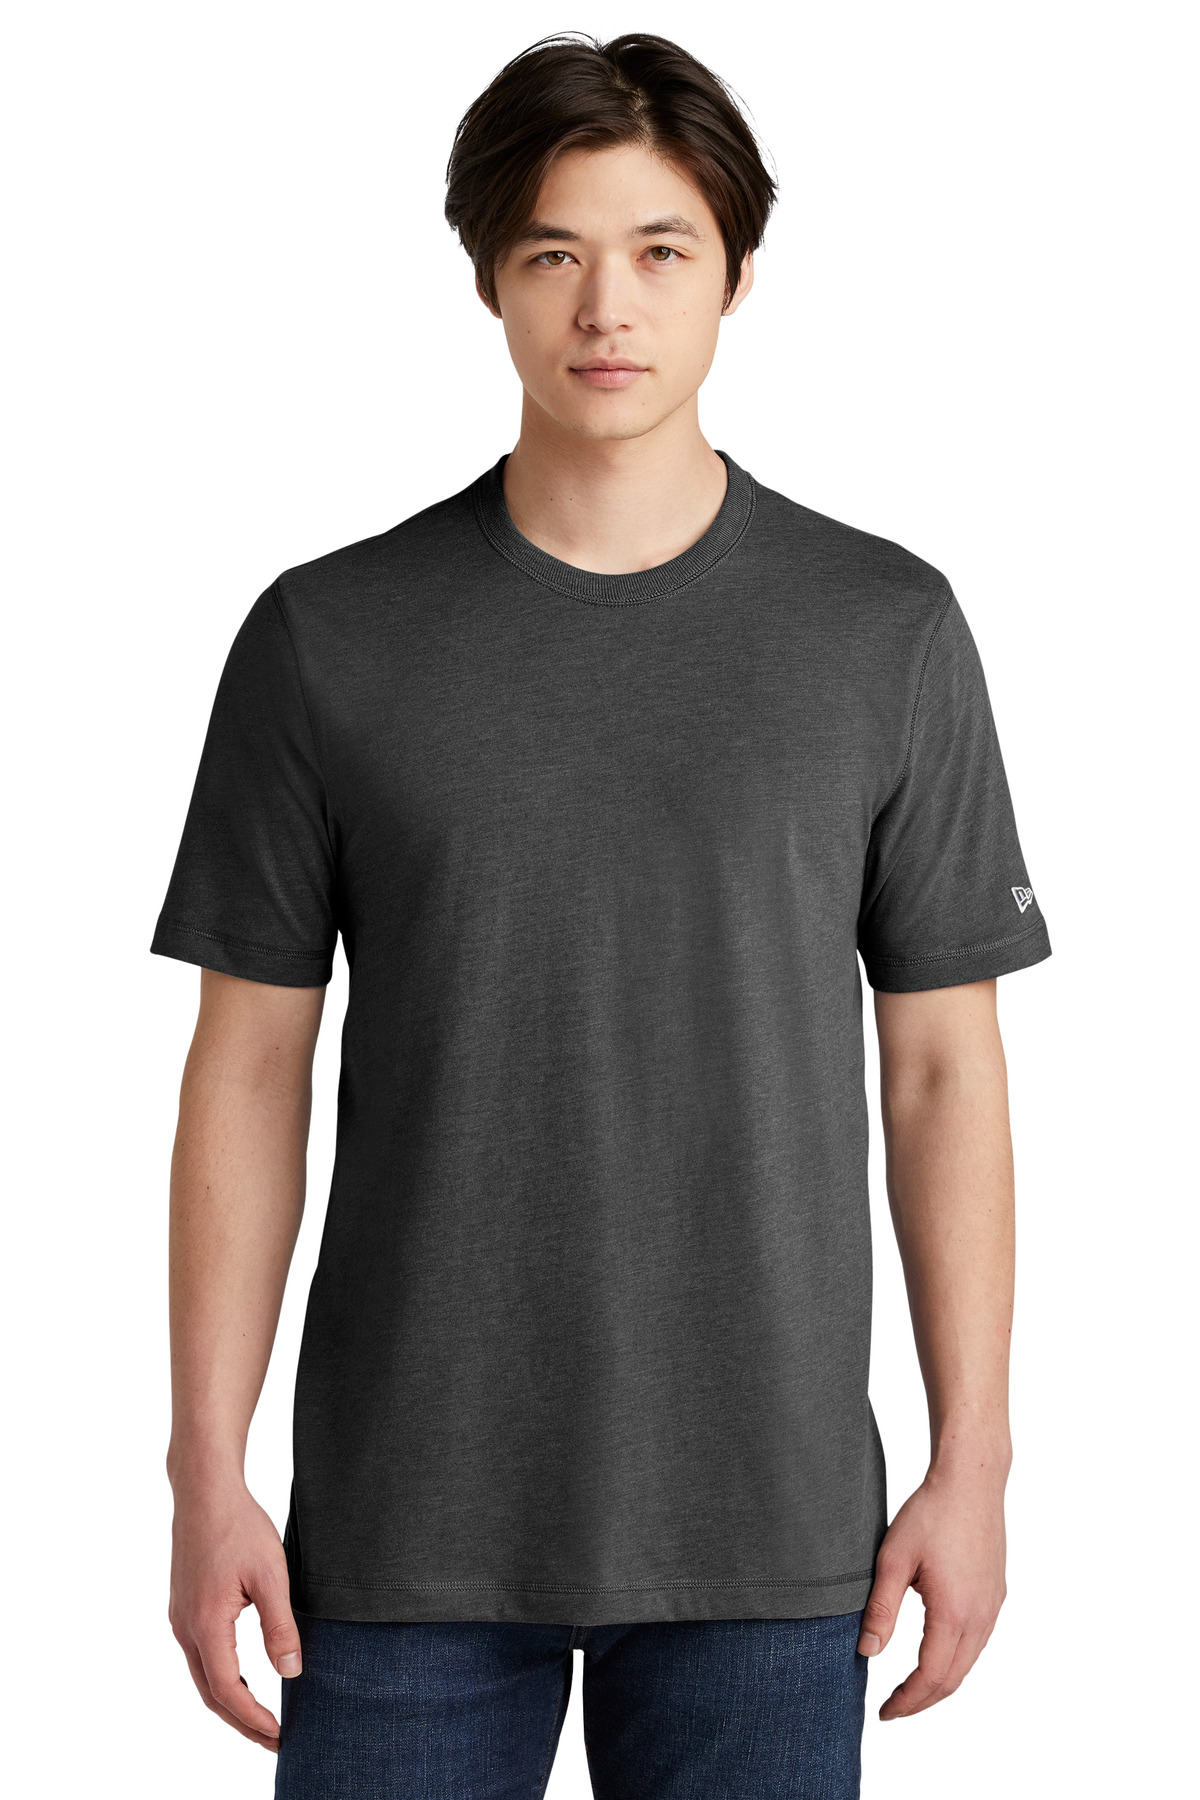 New Era Hospitality T-Shirts ® Sueded Cotton Blend Crew Tee.-New Era